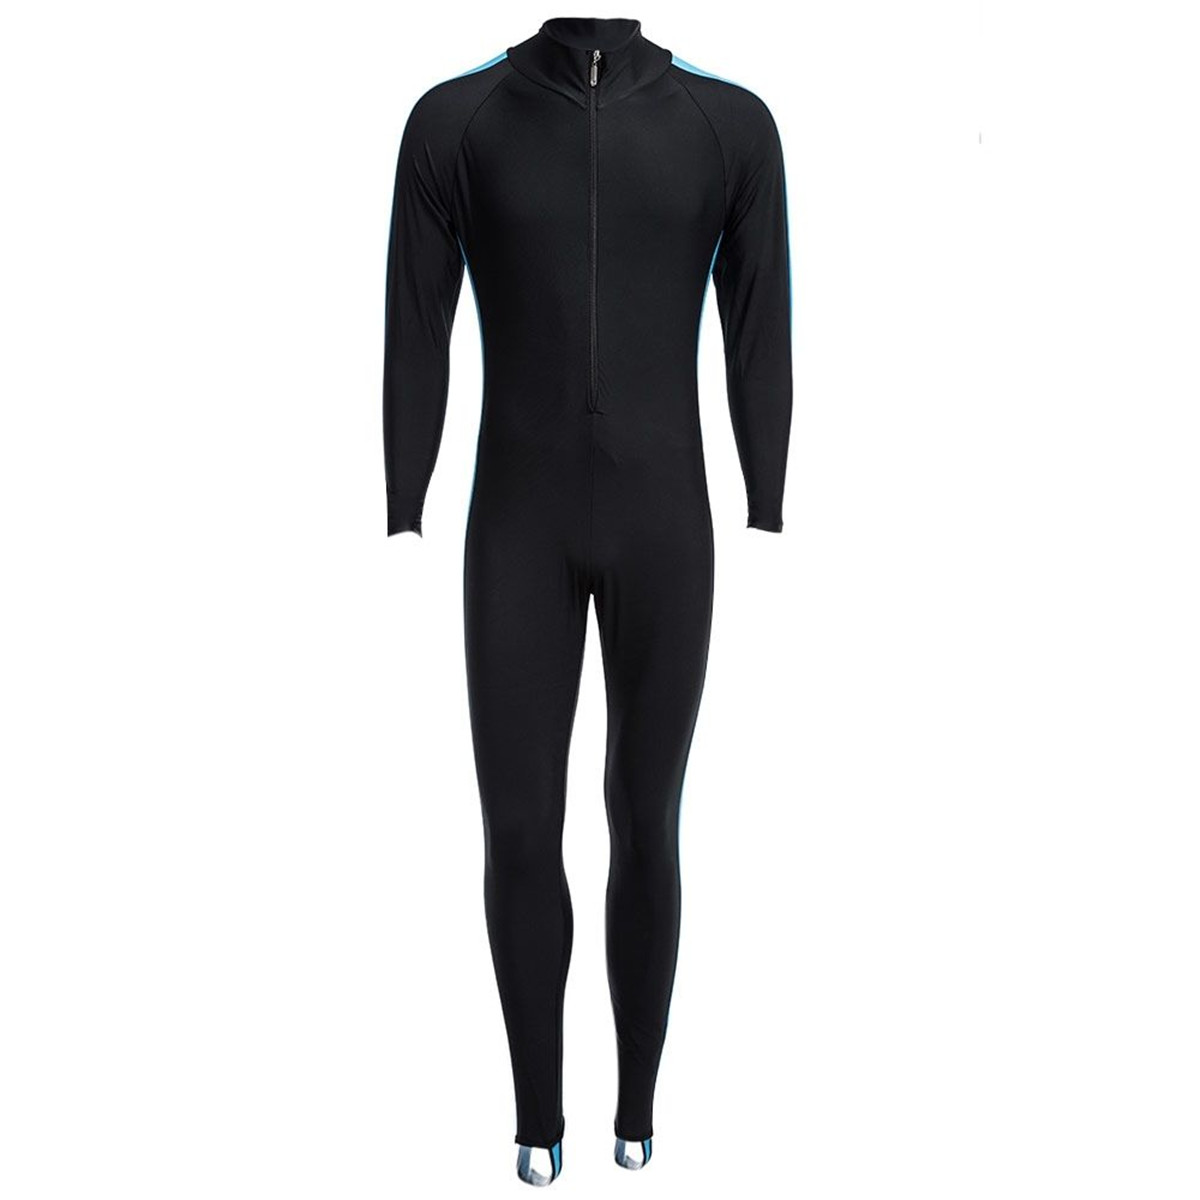 Unisex-Full-Body-Diving-Suit-Men-Women-Scuba-Diving-Wetsuit-Swimming-Surfing-UV-Protection-Snorkelin-1714664-6